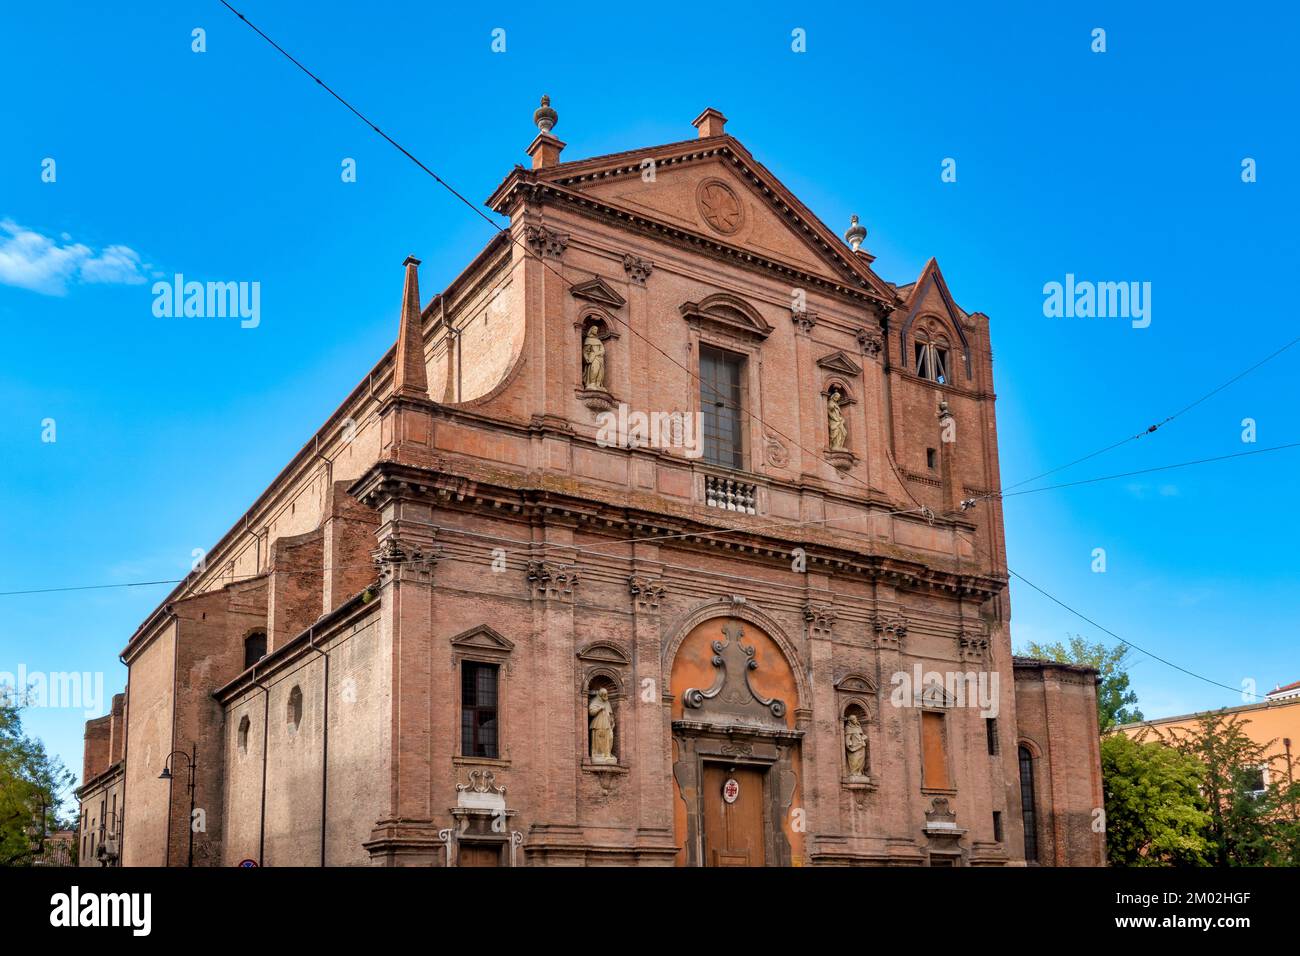 Facade of the Church of San Domenico, Ferara, Italy Stock Photo